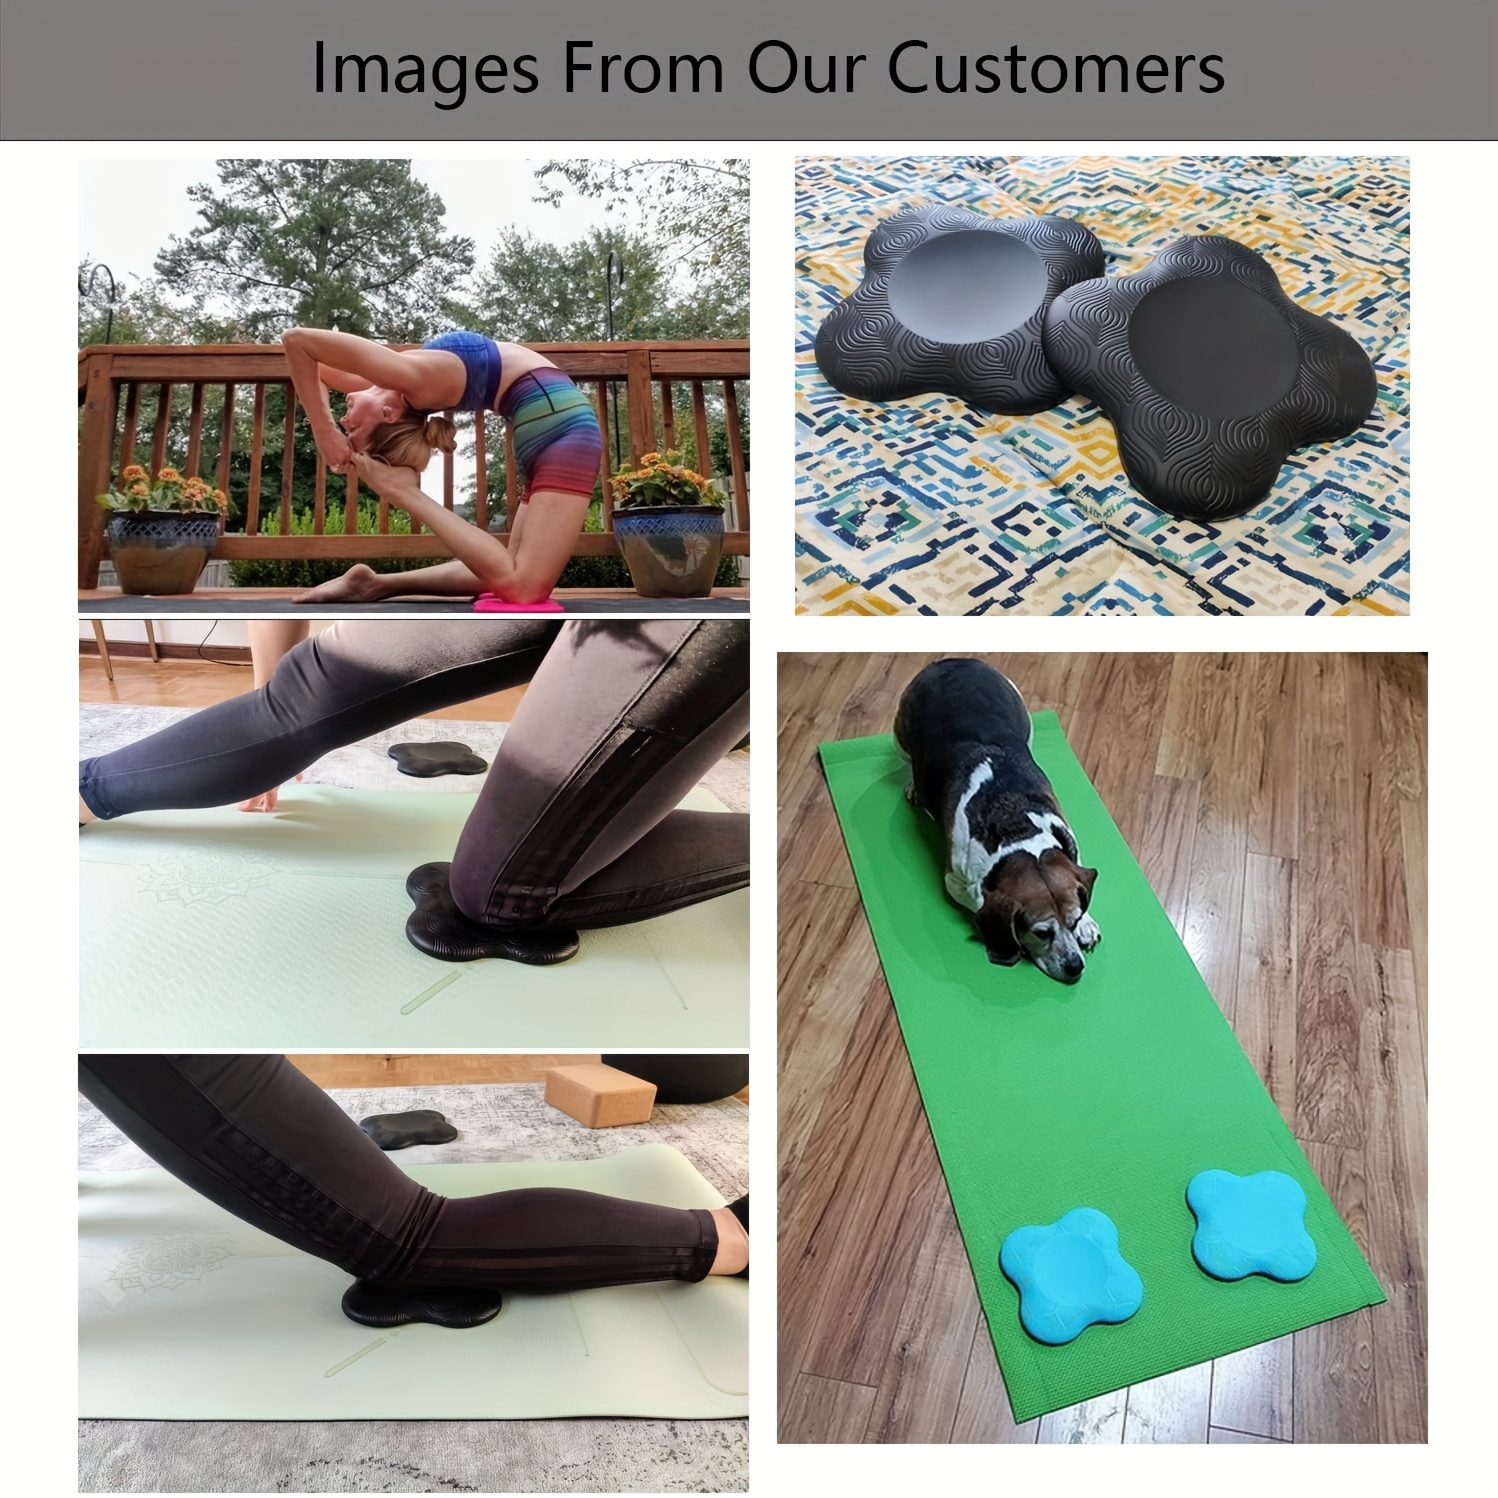 Yoga Knee Pad, Yoga Mat - Kneeling Support Yoga Yoga Knee Pads